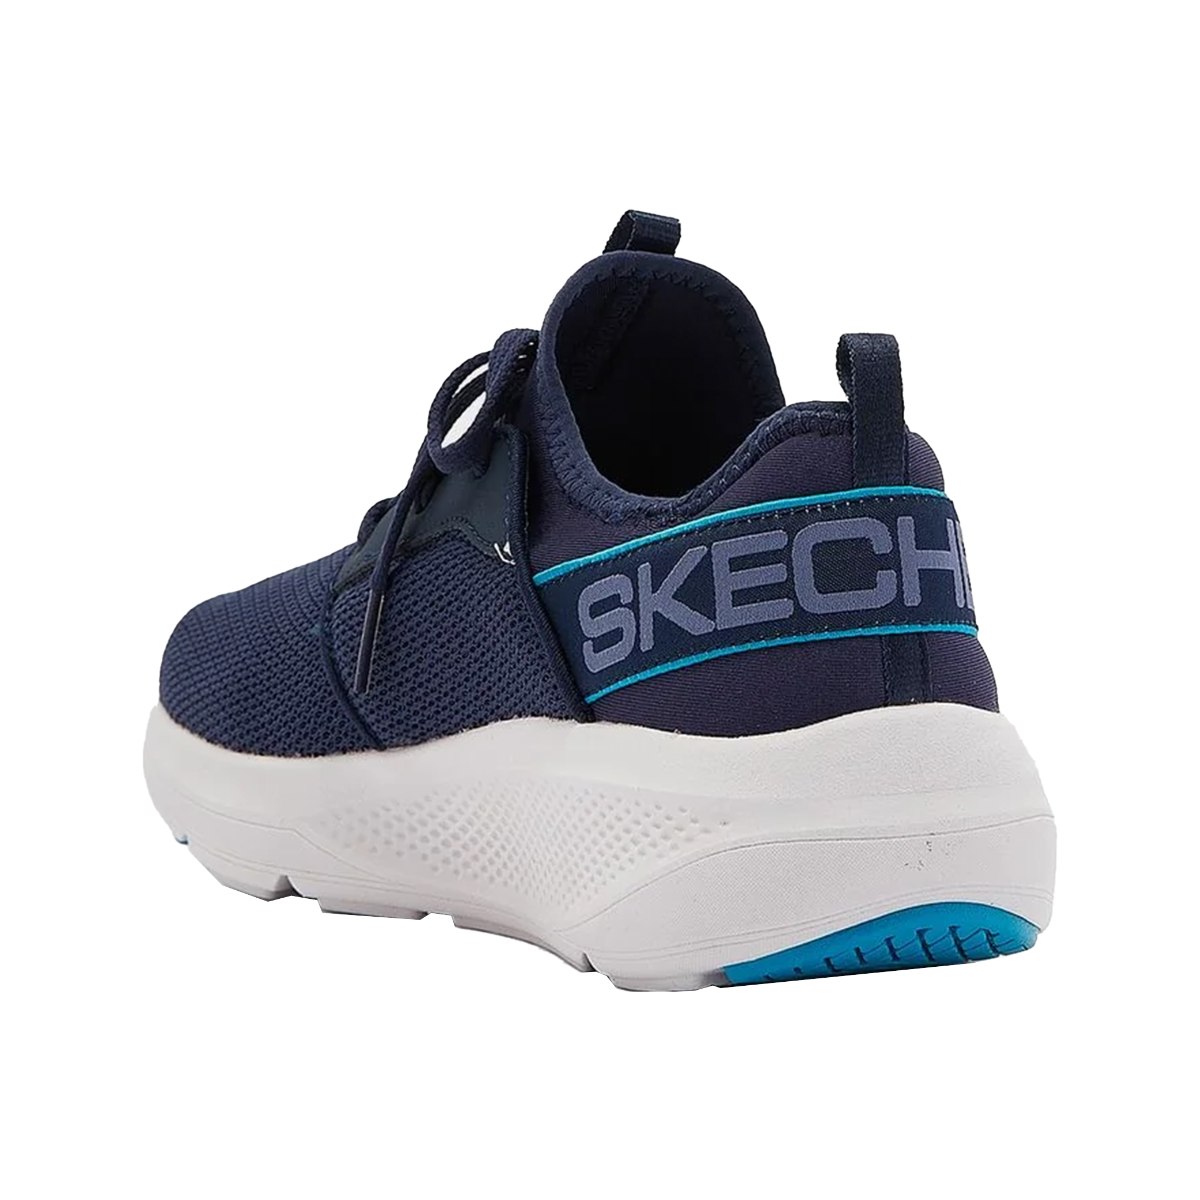 Skechers Go Run Elevate Shoes For Women, Dark Blue